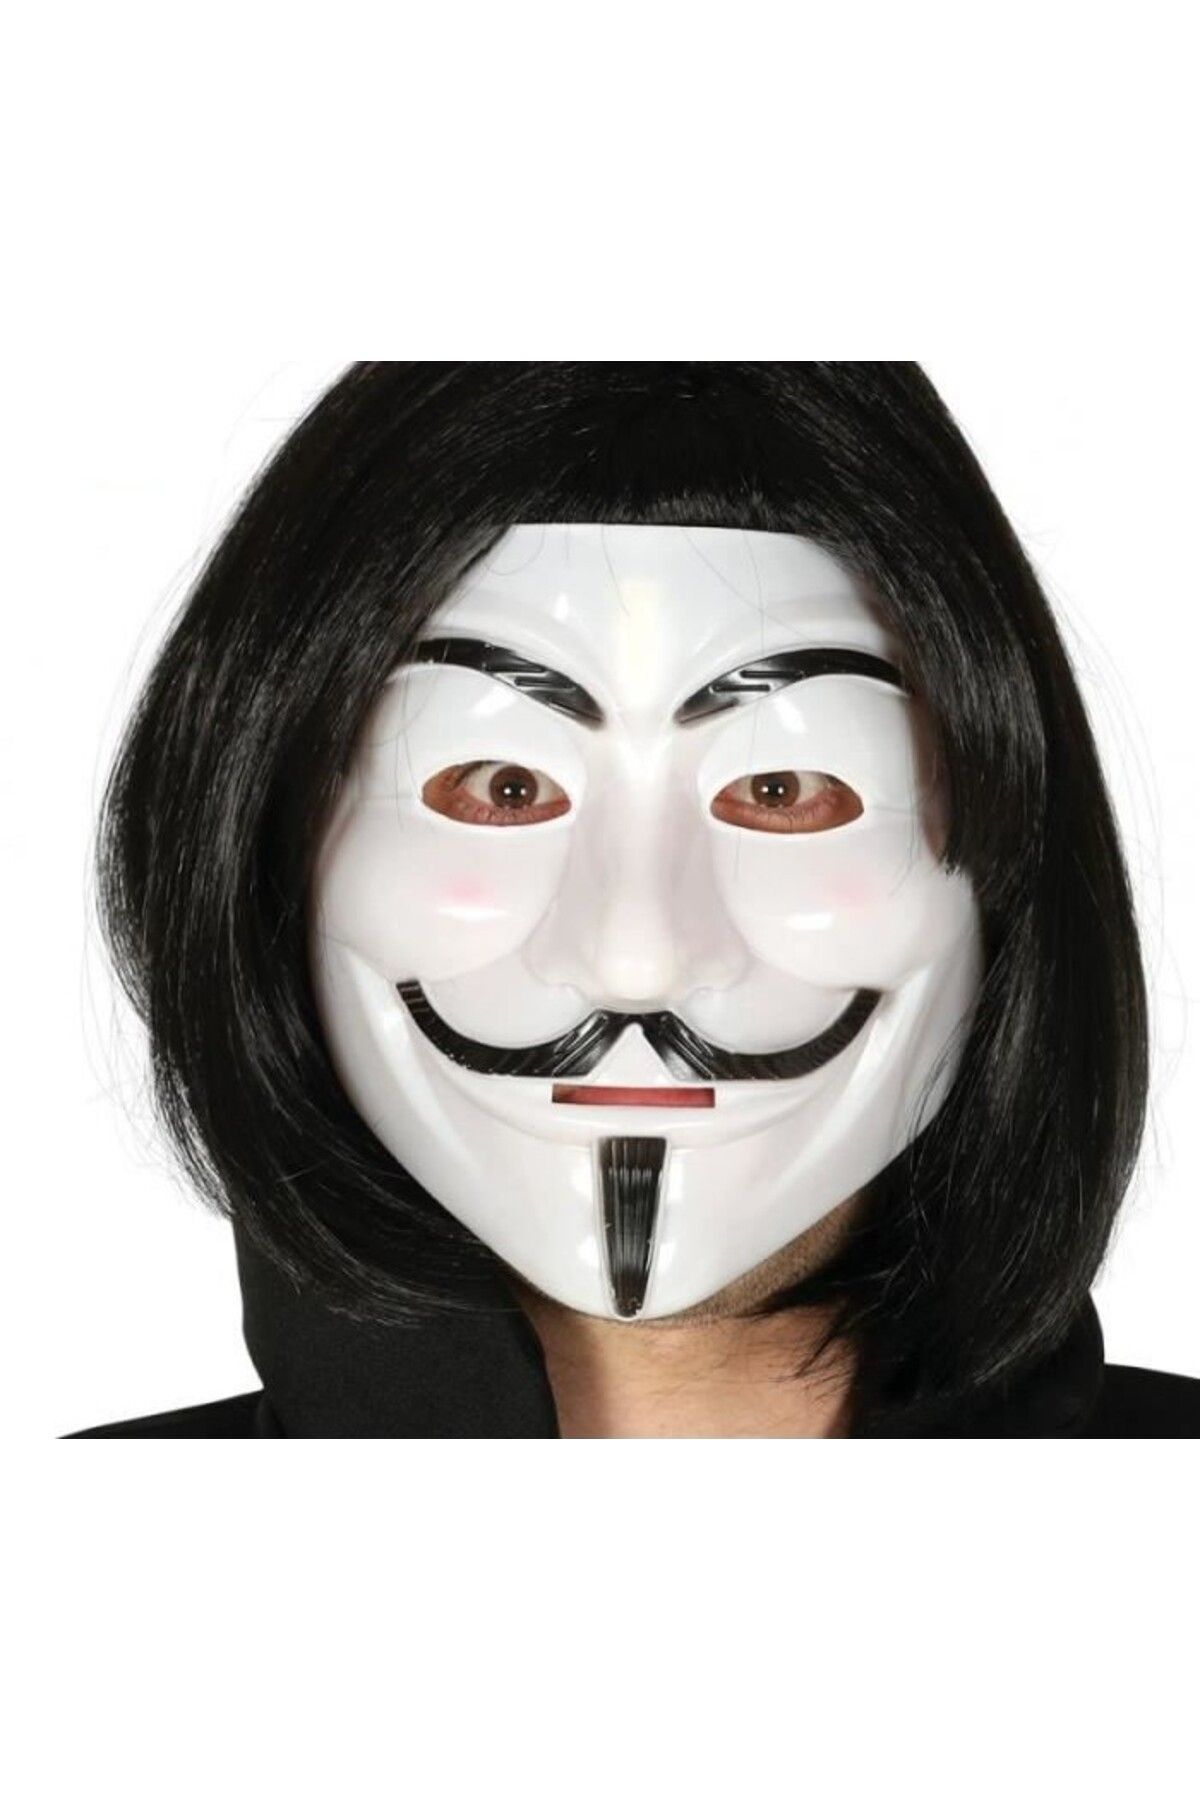 YKLIB Nessiworld Siyah Renk Takma Kısa Saç Ve V For Vendetta Maskesi Anonymous Maskesi